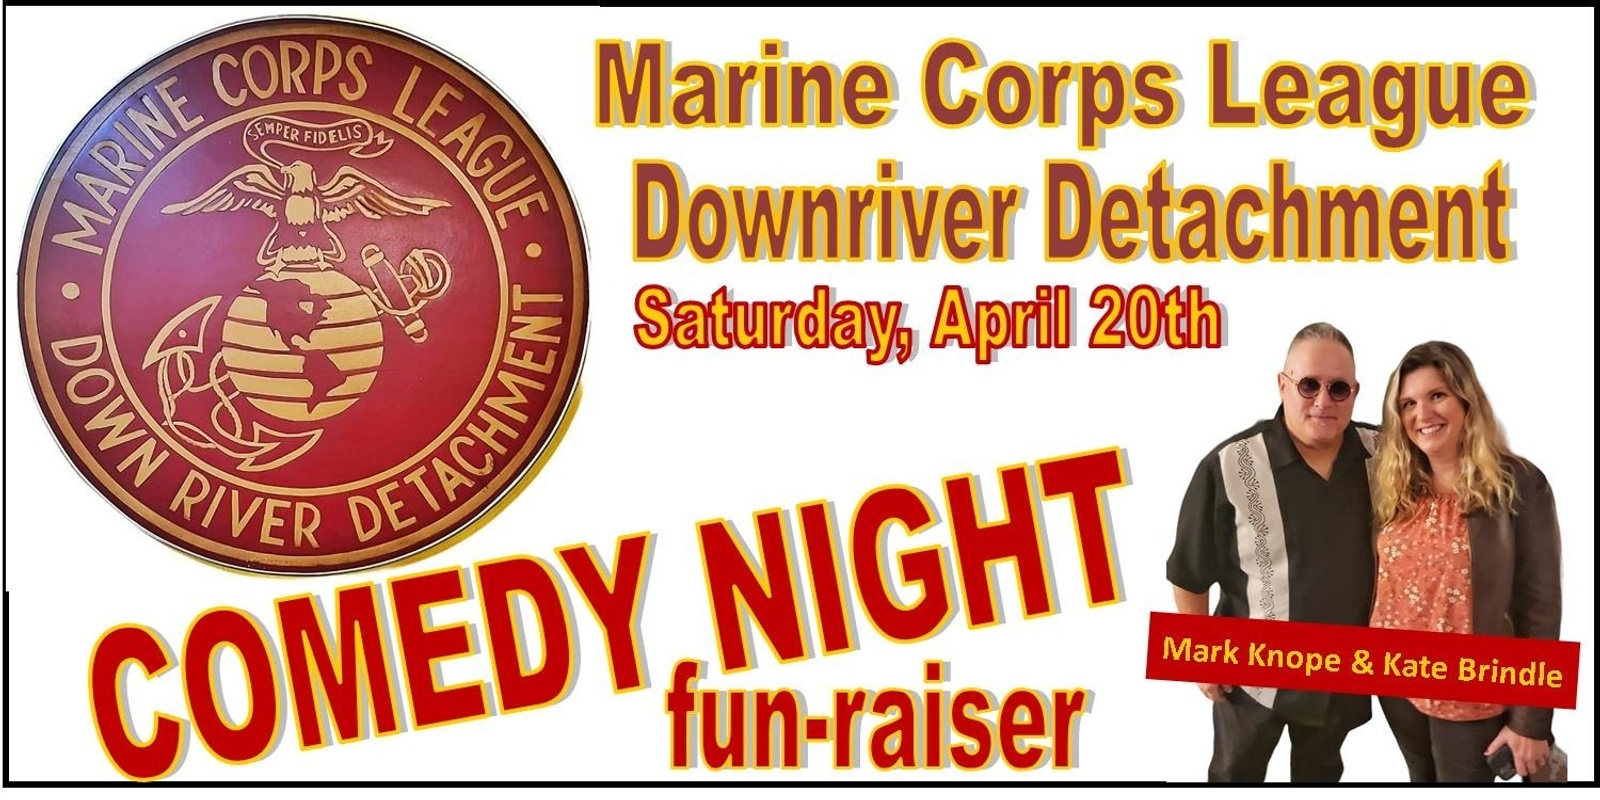 Banner image for MARINE CORPS LEAGUE - DOWNRIVER DETACHMENT Comedy Night Fun-Raiser